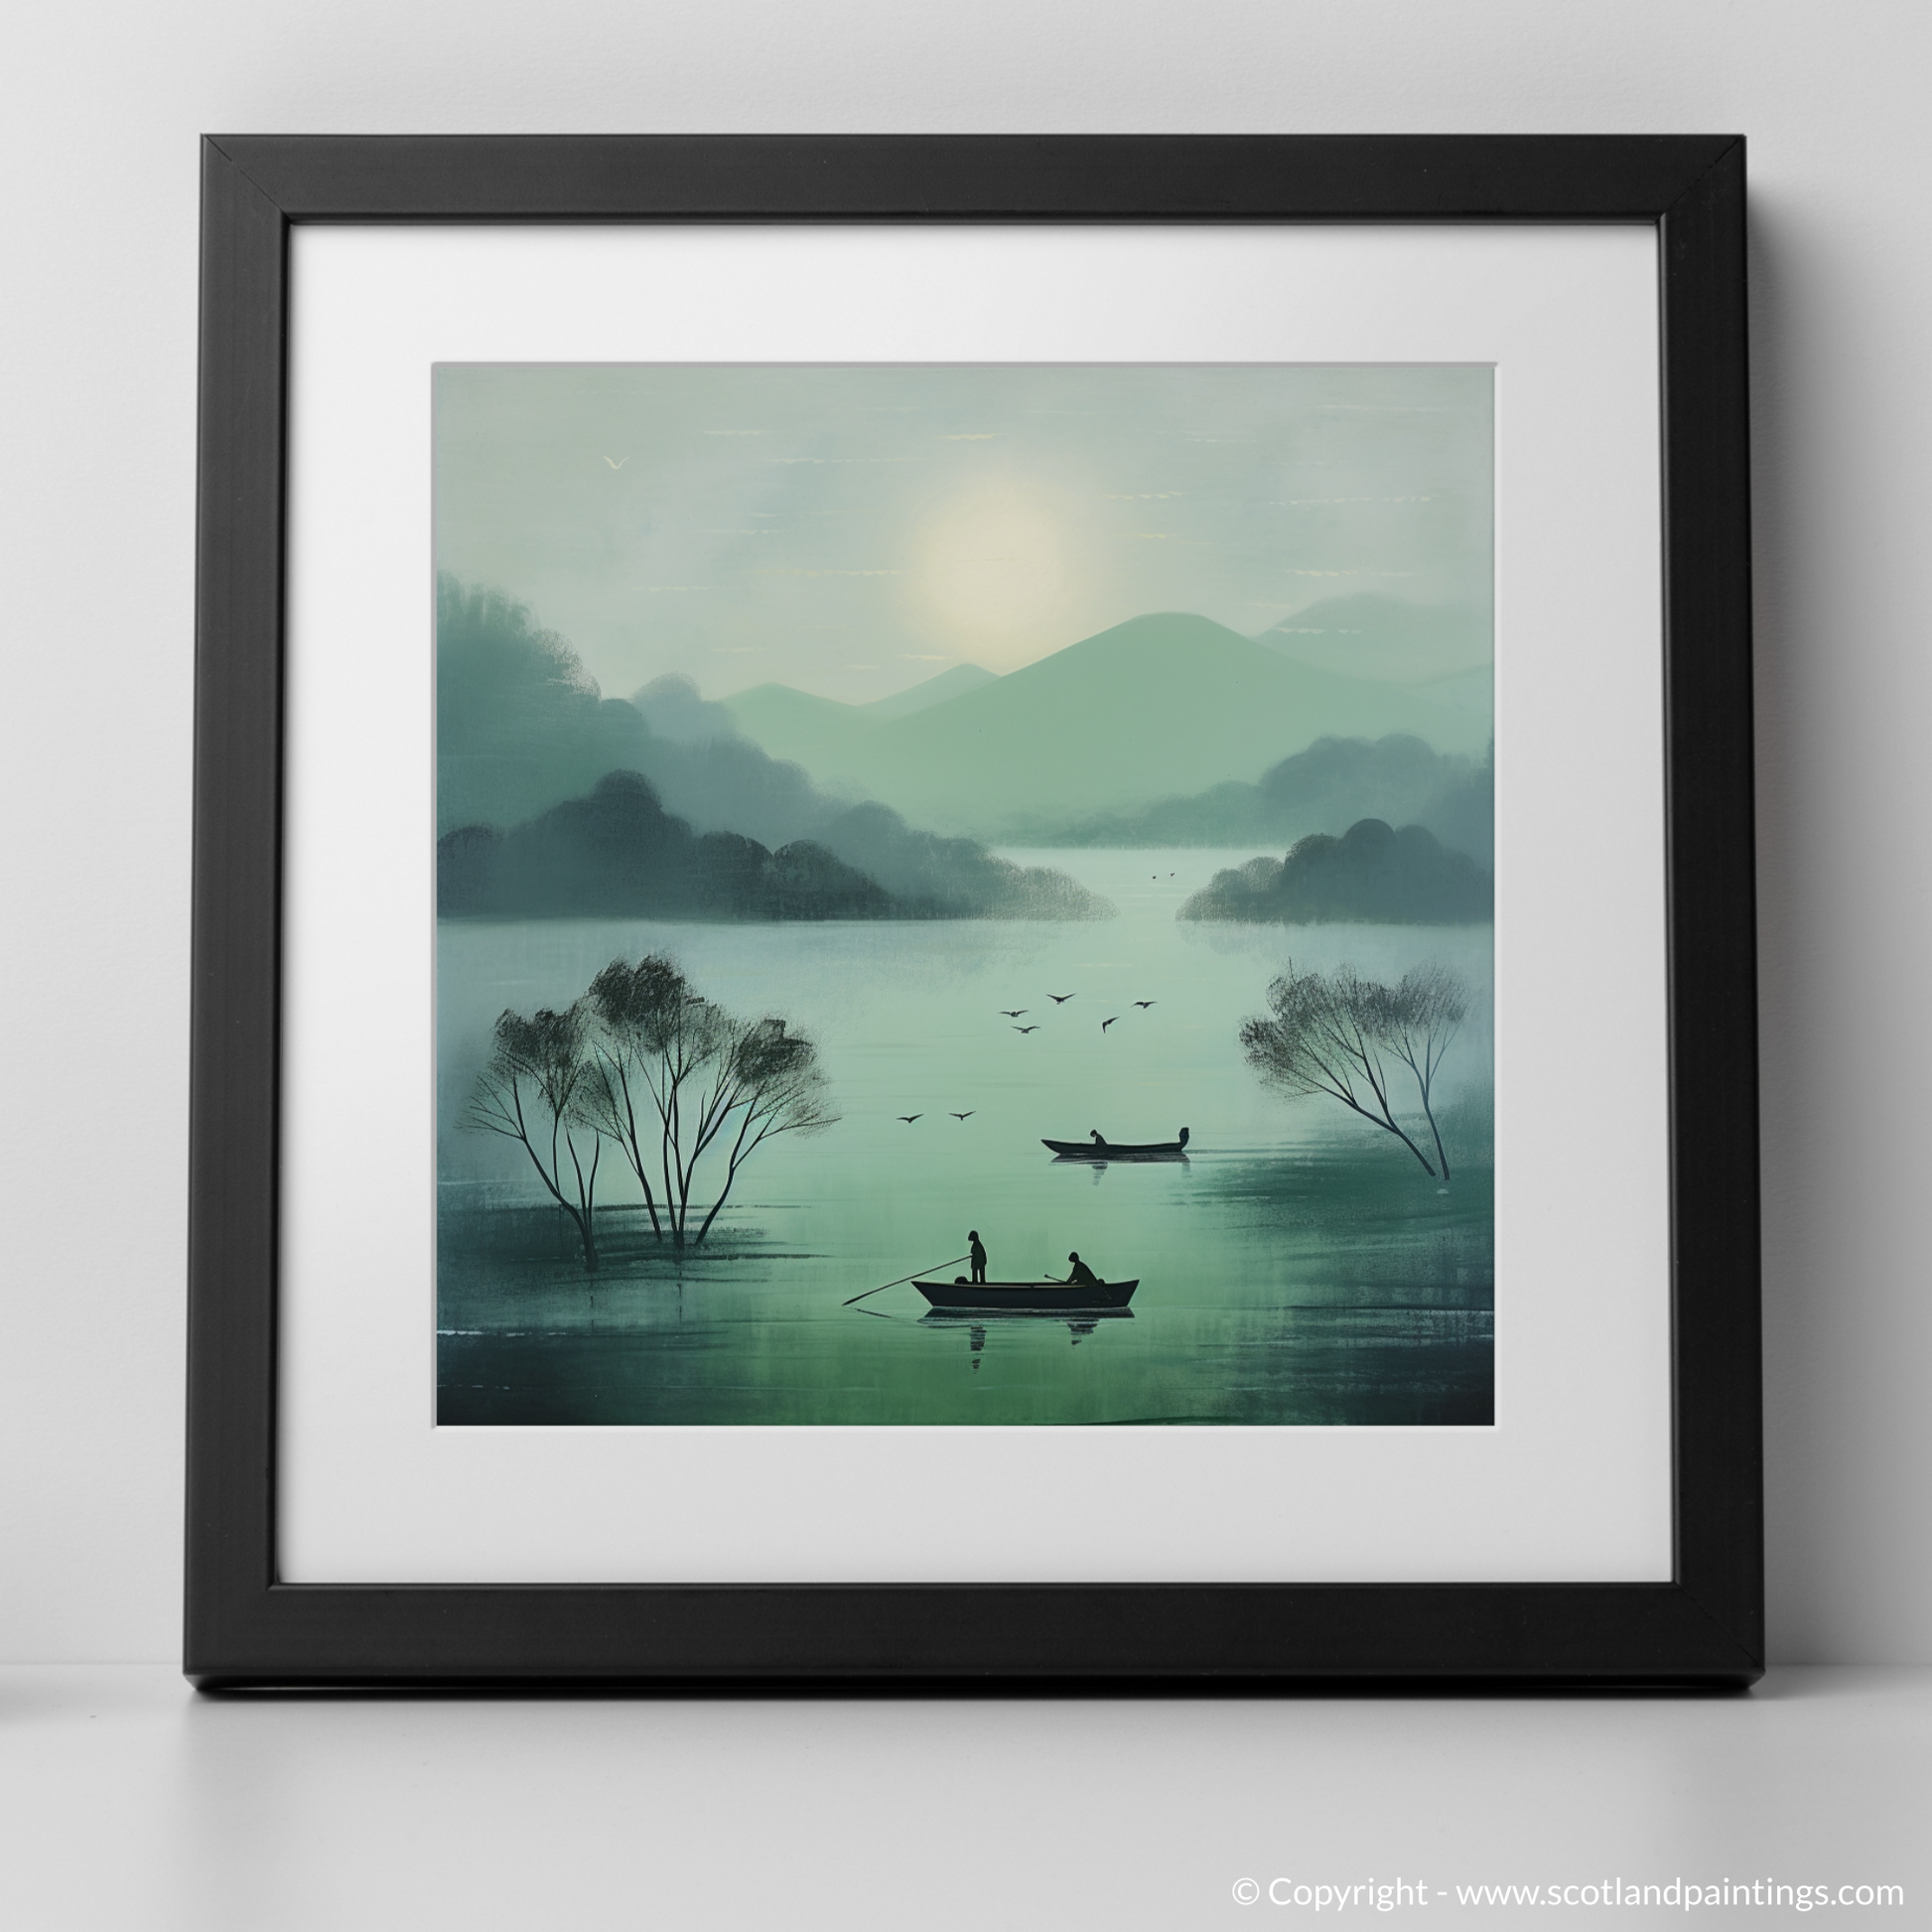 Art Print of Misty morning on Loch Lomond with a black frame